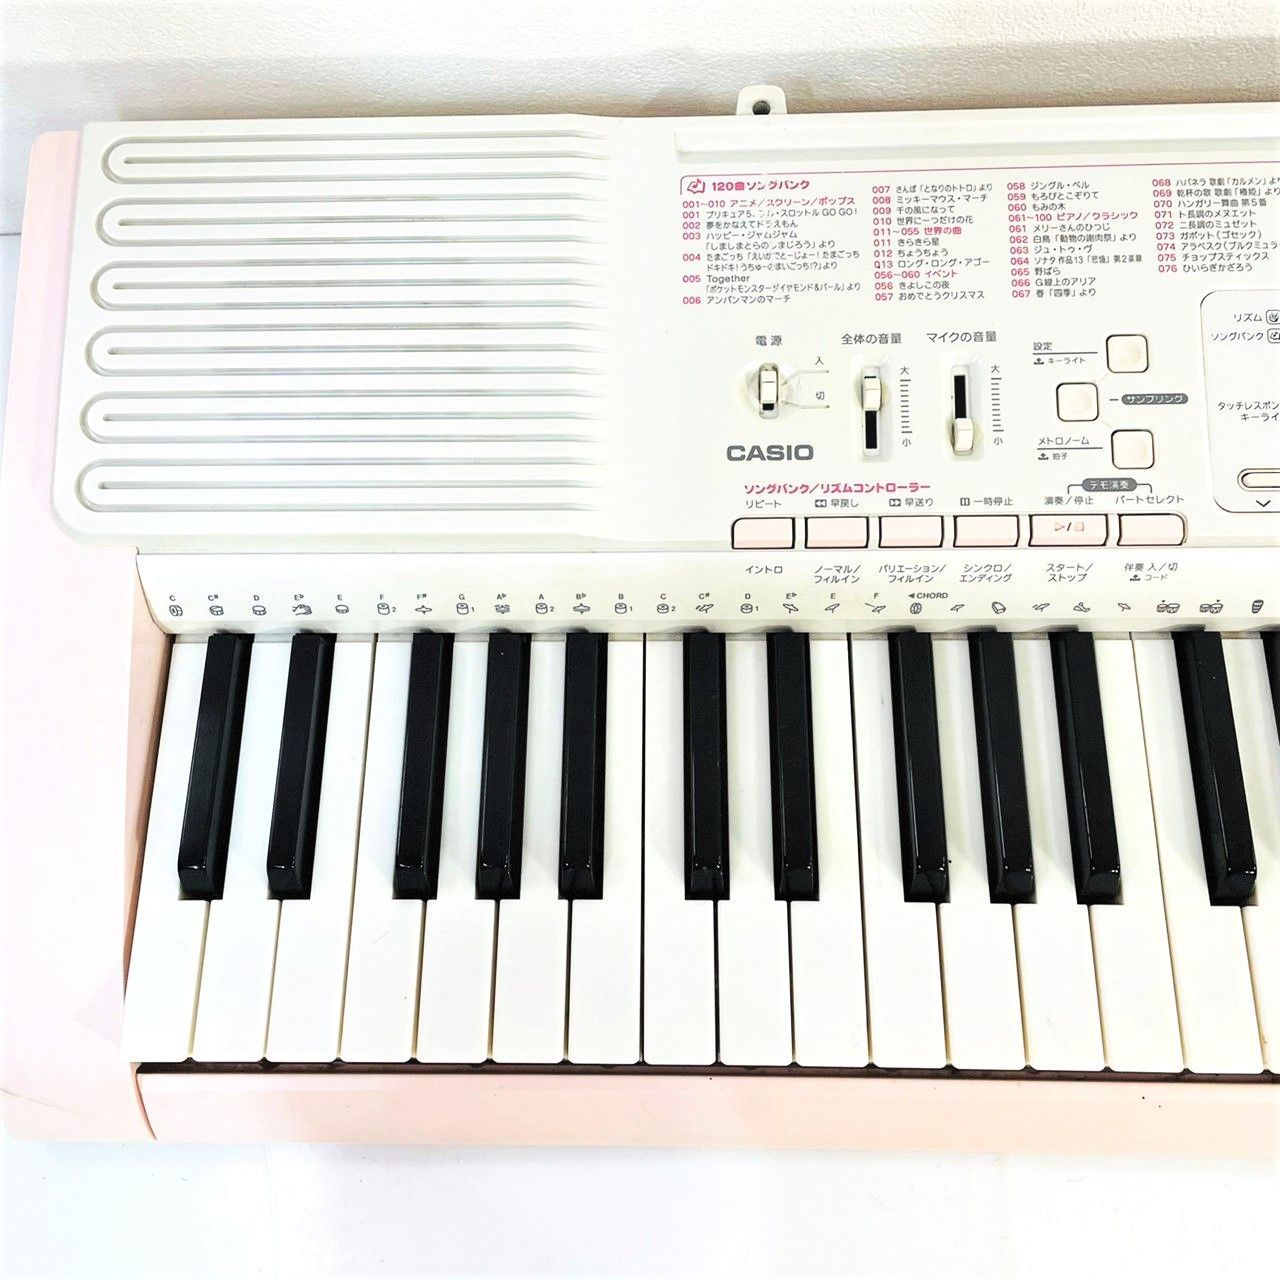 CASIO カシオ LK-35 電子キーボード 61鍵盤 光ナビケーション スタンド アダプター付属 品 動作確認済み - 鍵盤楽器、ピアノ